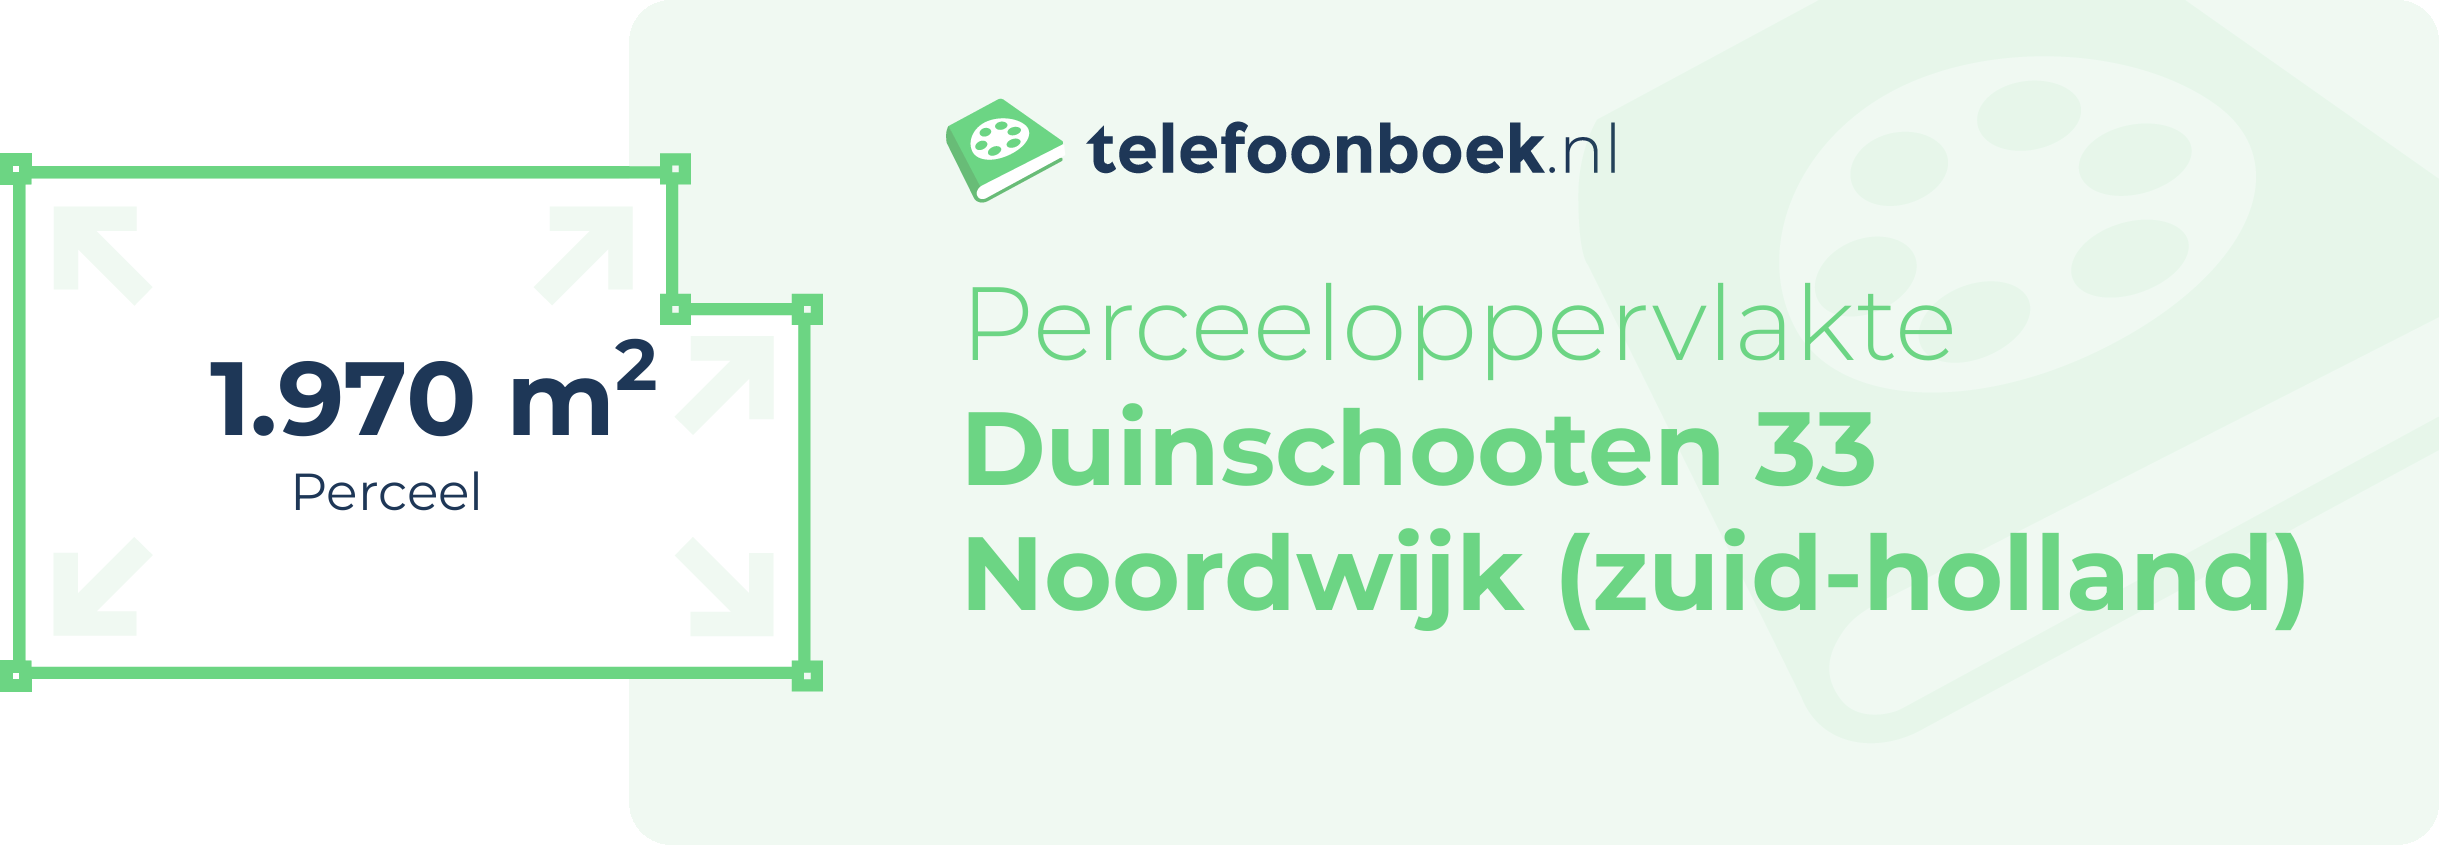 Perceeloppervlakte Duinschooten 33 Noordwijk (Zuid-Holland)